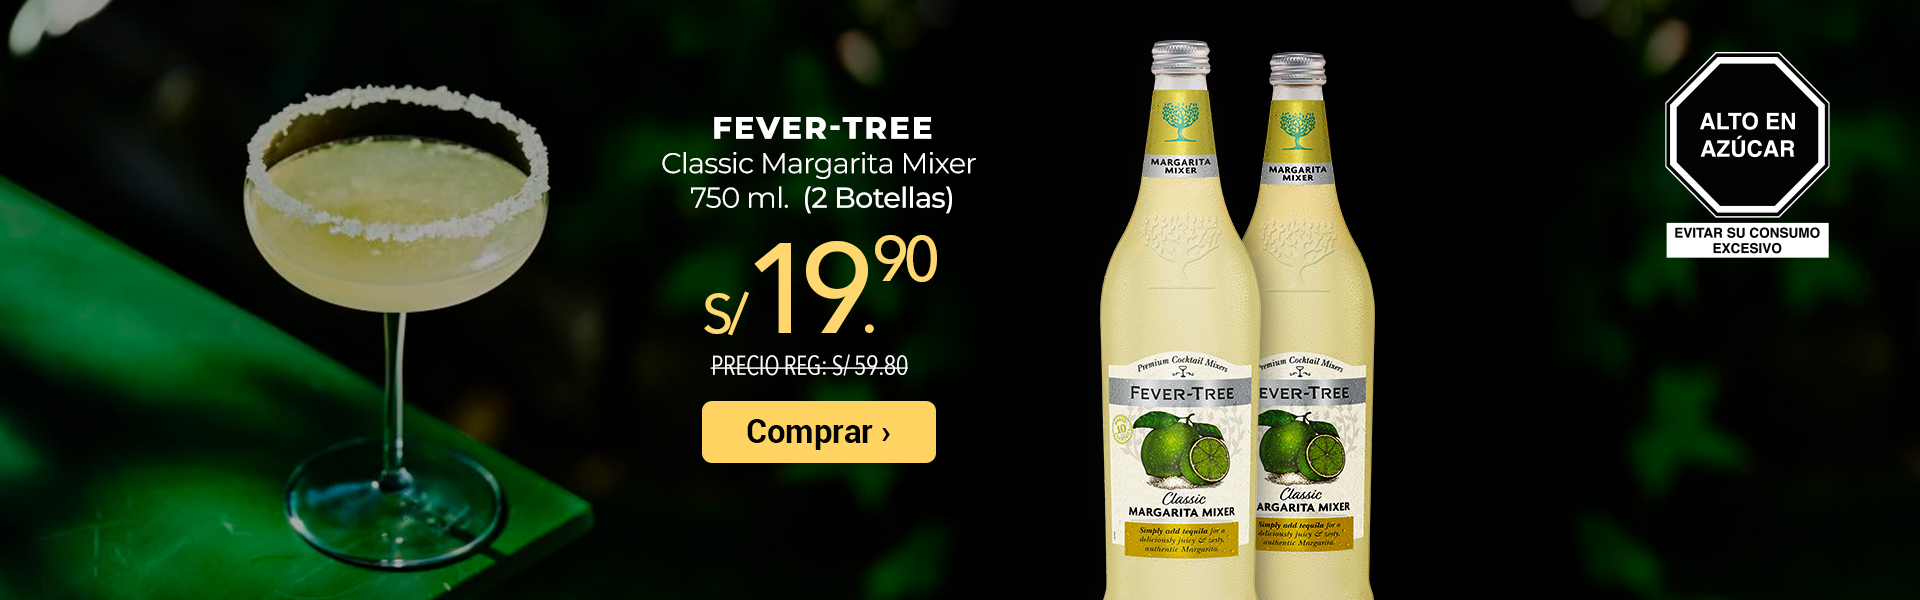 Fever-Tree Classic Margarita Mixer